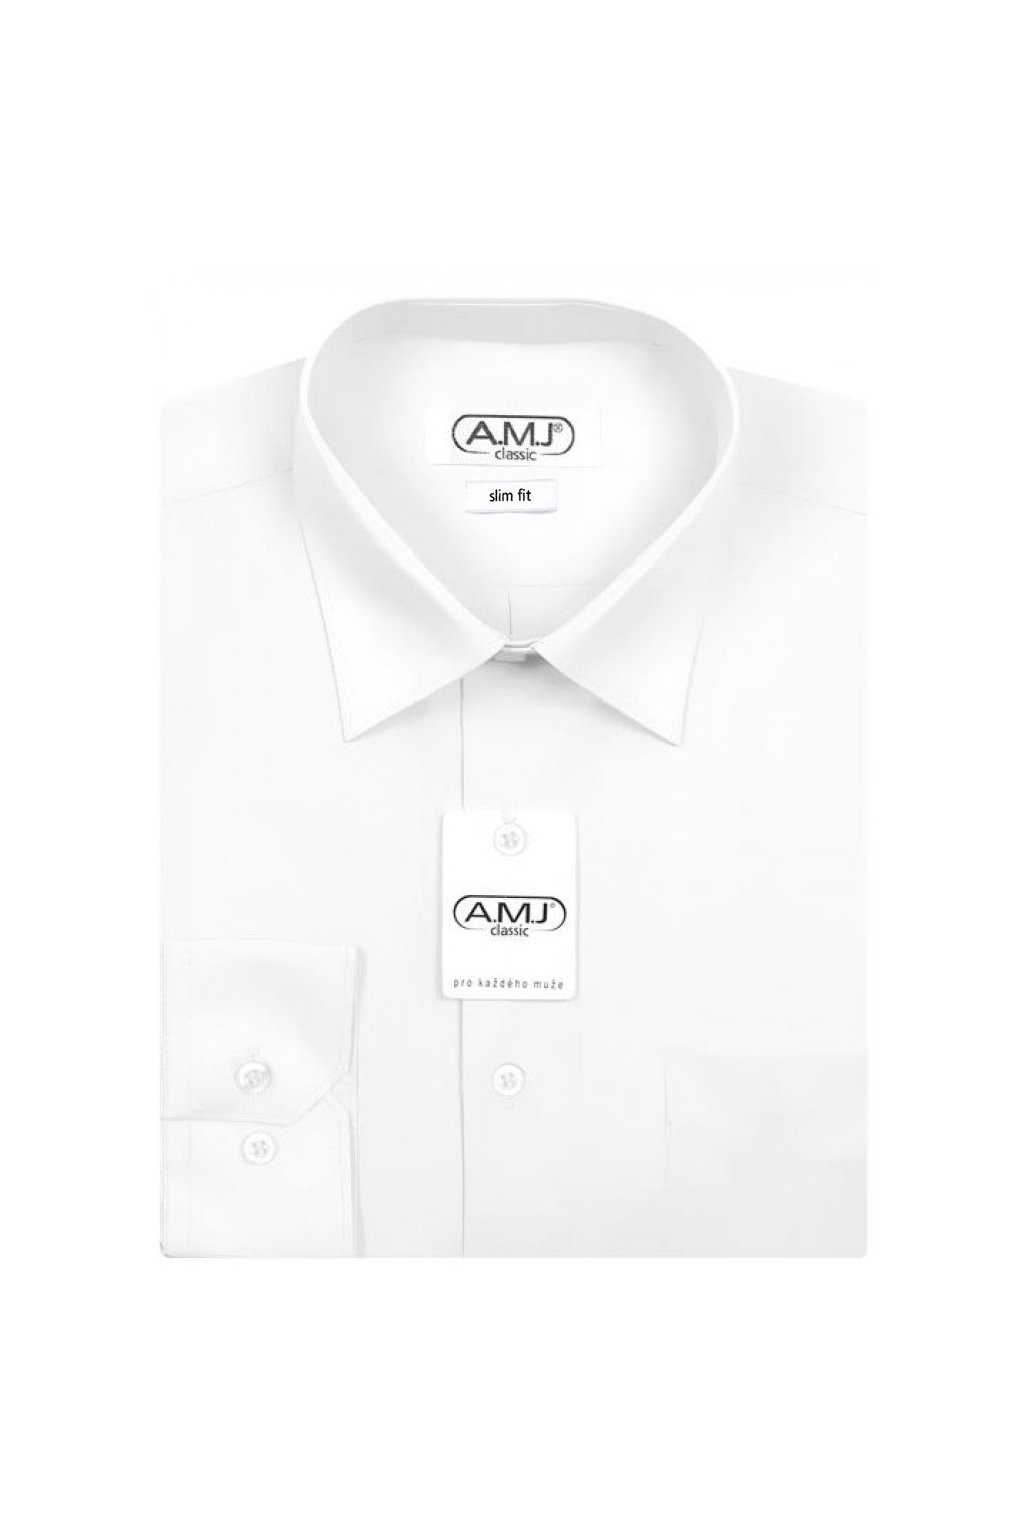 Pánská košile AMJ Slim fit  - bílá